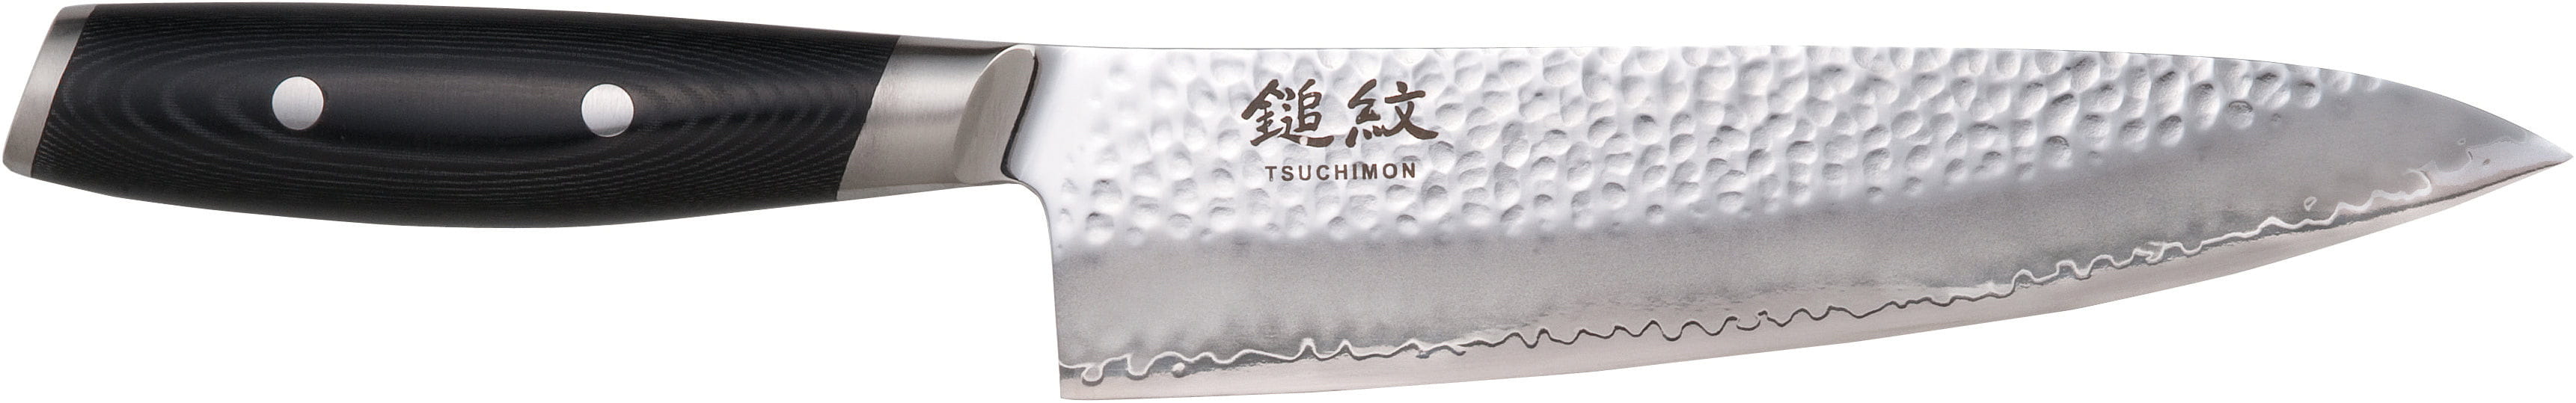 Couteau du chef Yaxell Tsuuchimon, 20 cm